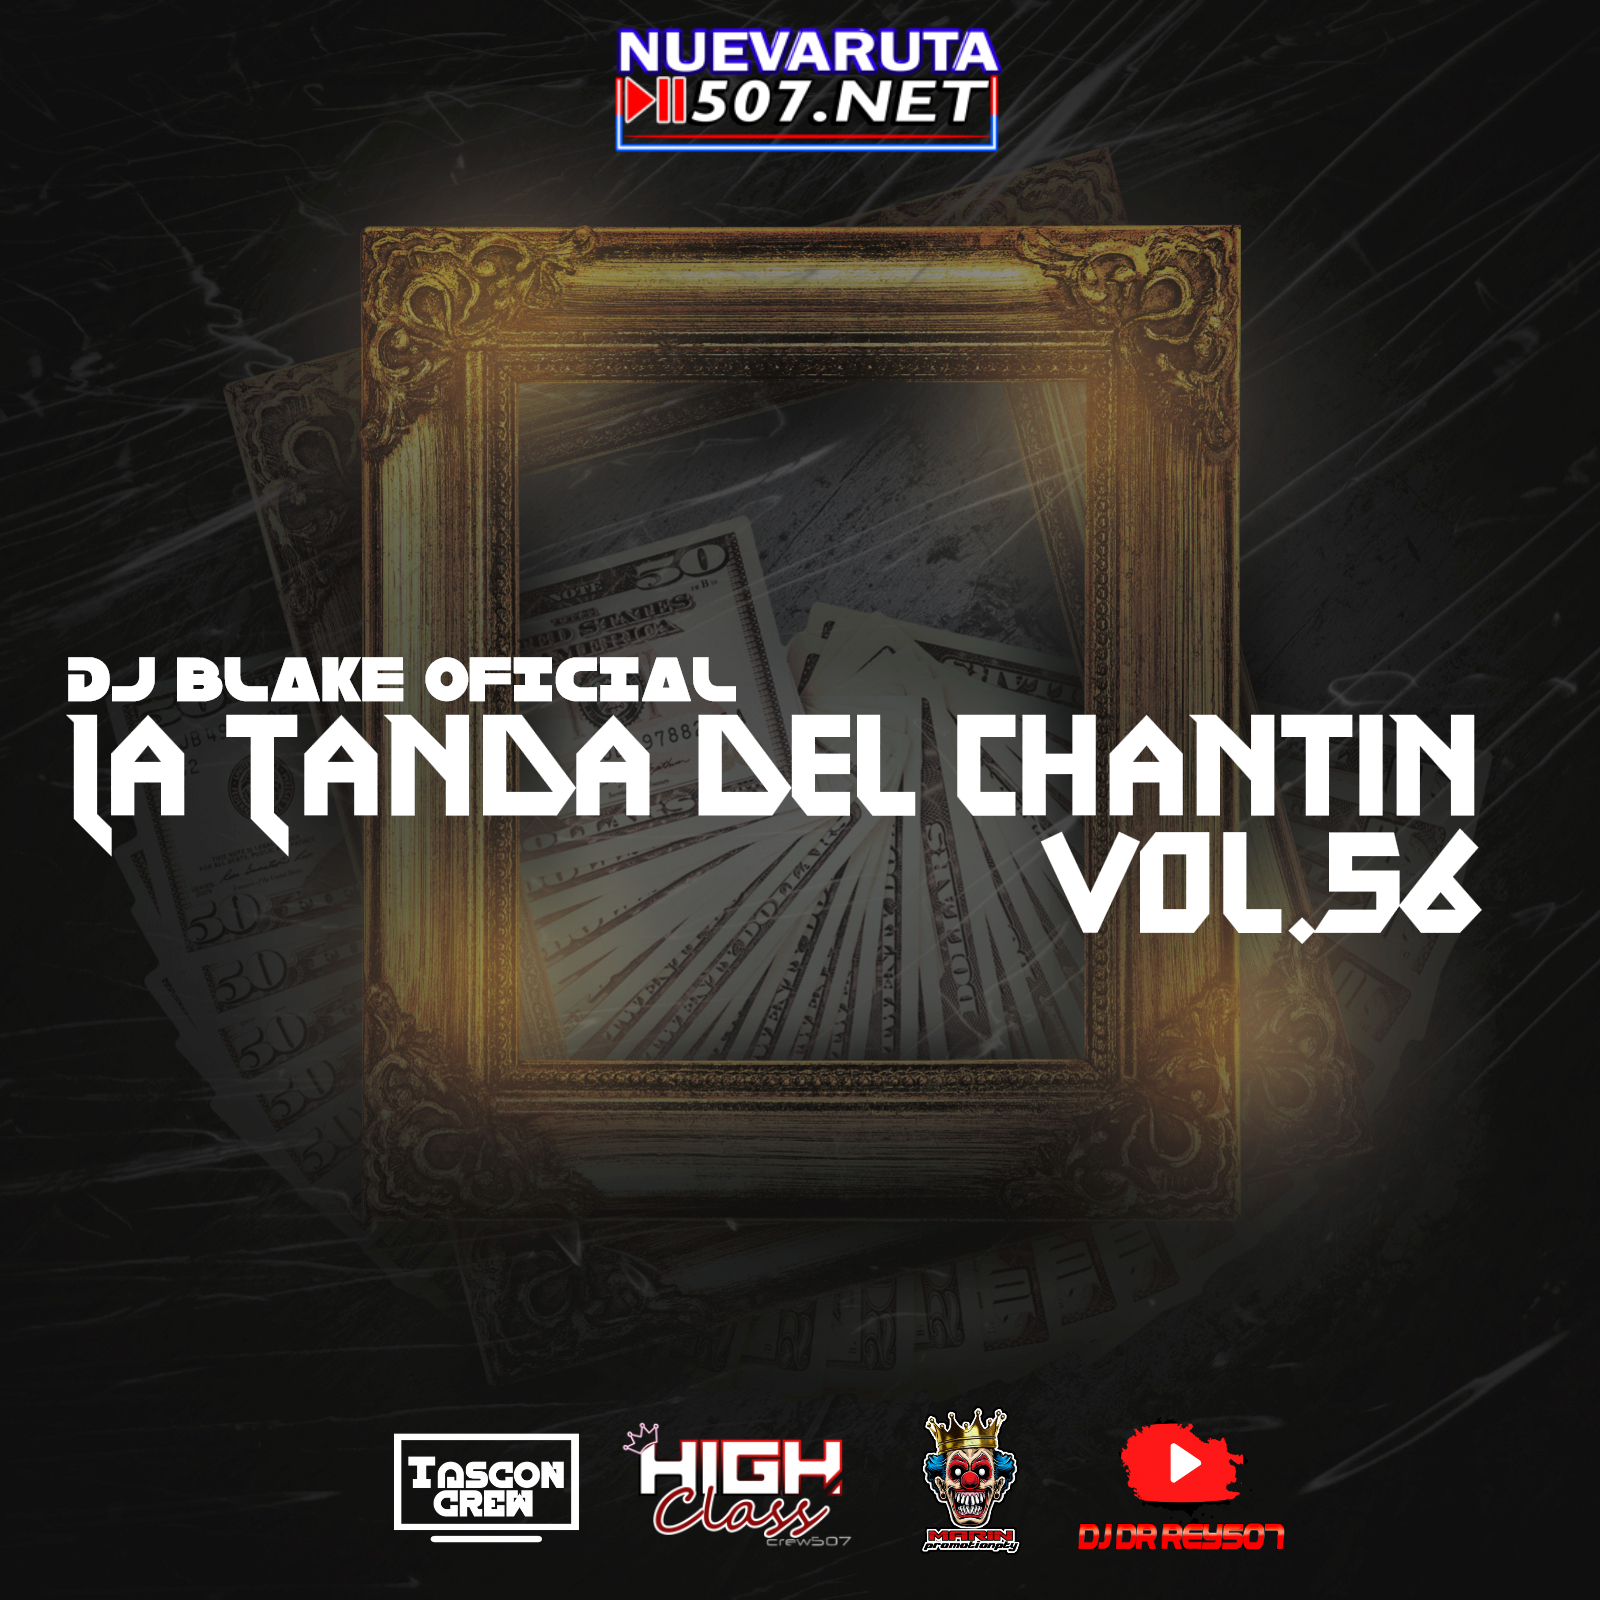 La Tanda Del Chantin Live Vol 56 - DjBlake.mp3